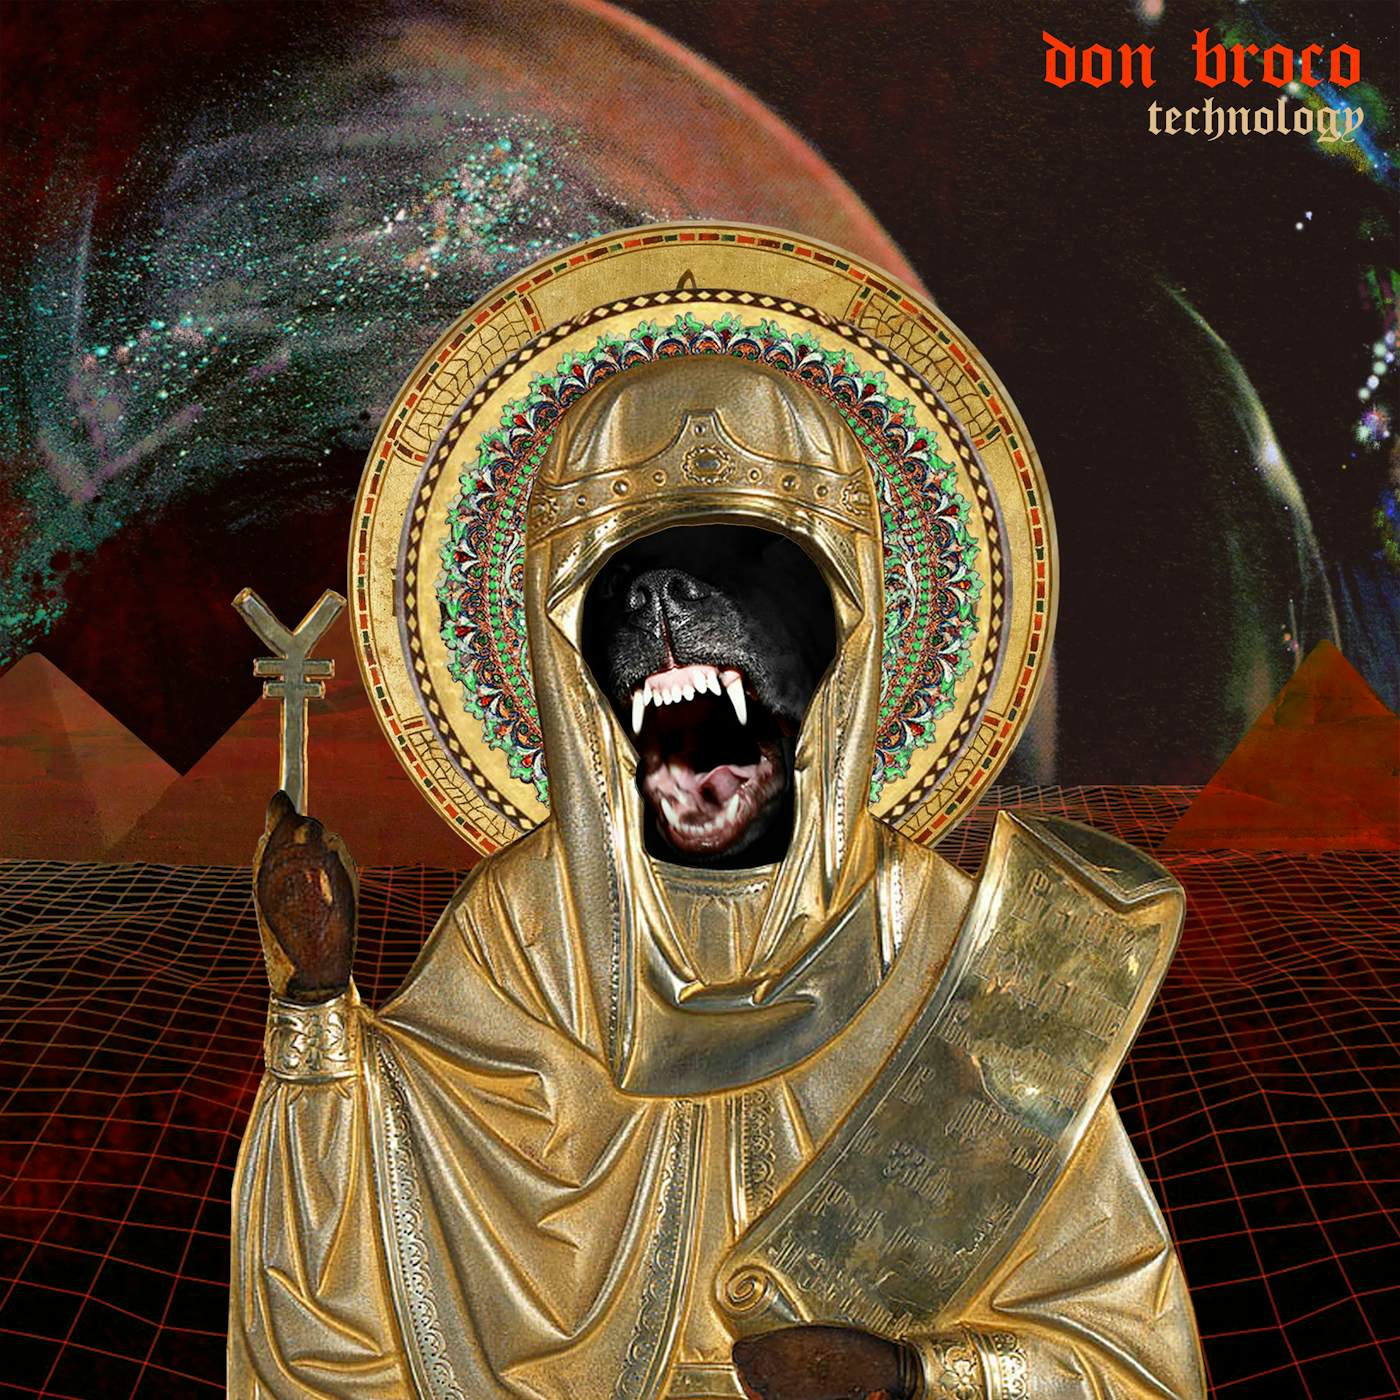 DON BROCO Technology Vinyl Record